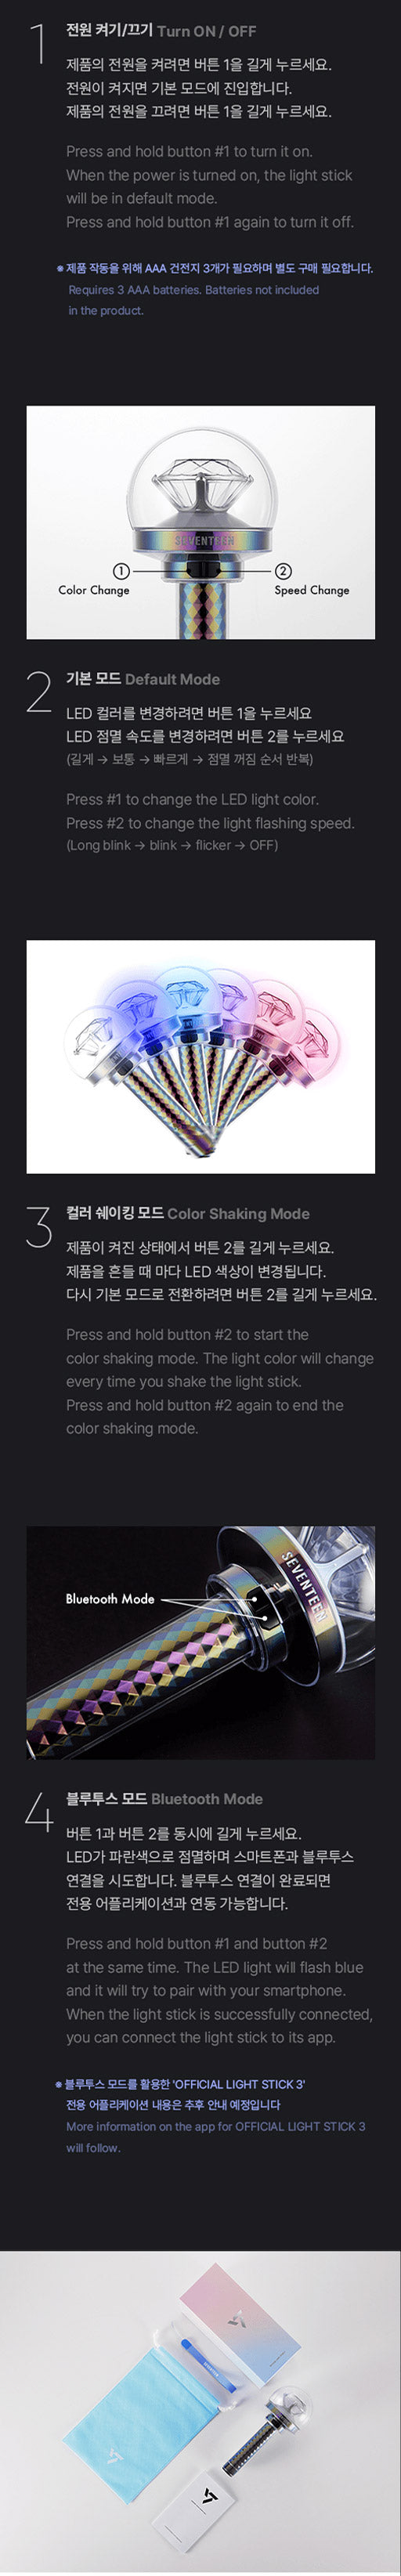 Seventeen Official Light Stick Ver 3 – Kpop Exchange